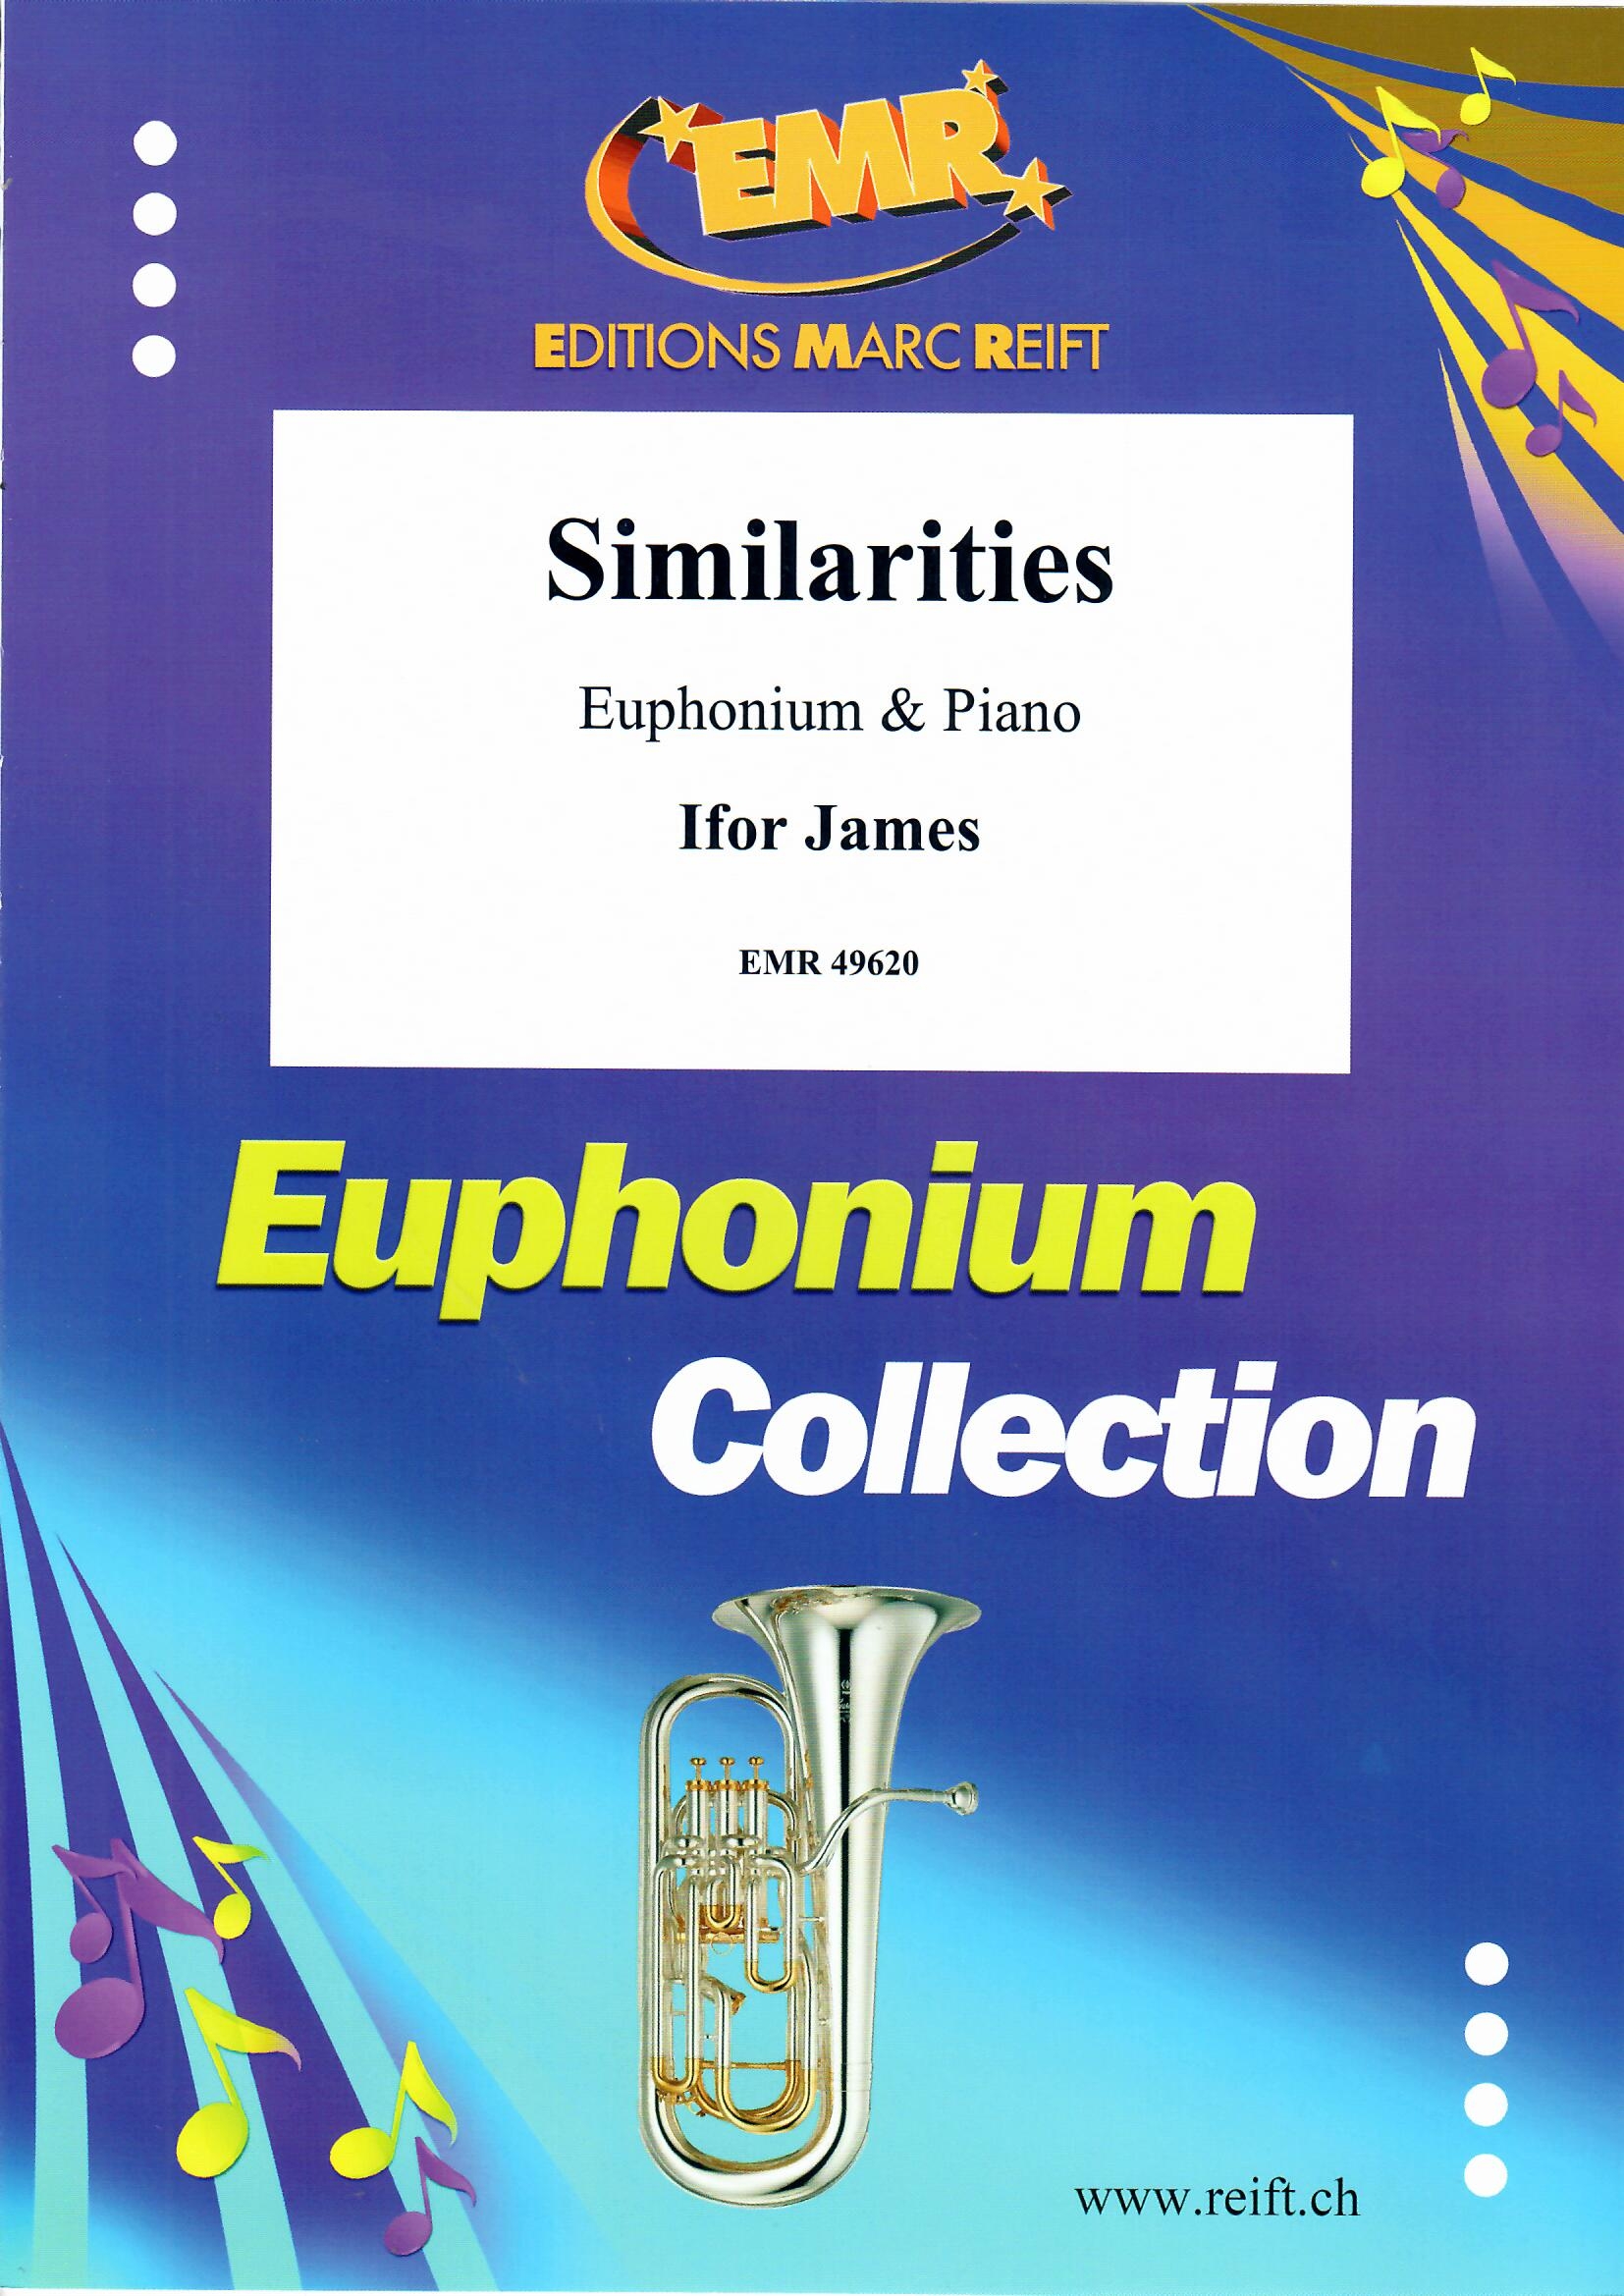 SIMILARITIES, NEW & RECENT Publications, SOLOS - Euphonium